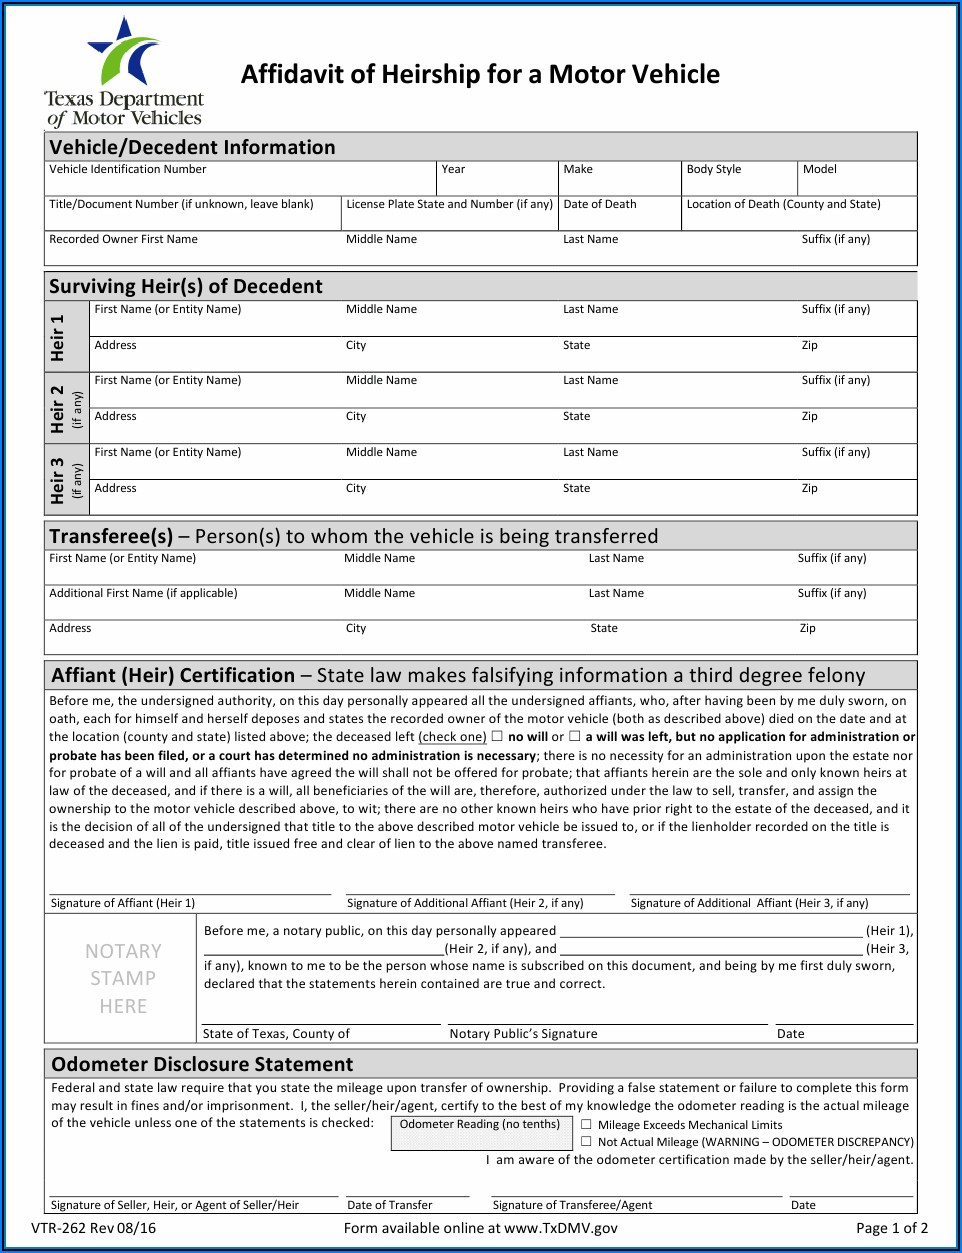 affidavit-of-heirship-form-texas-form-resume-examples-l6yn76yv3z